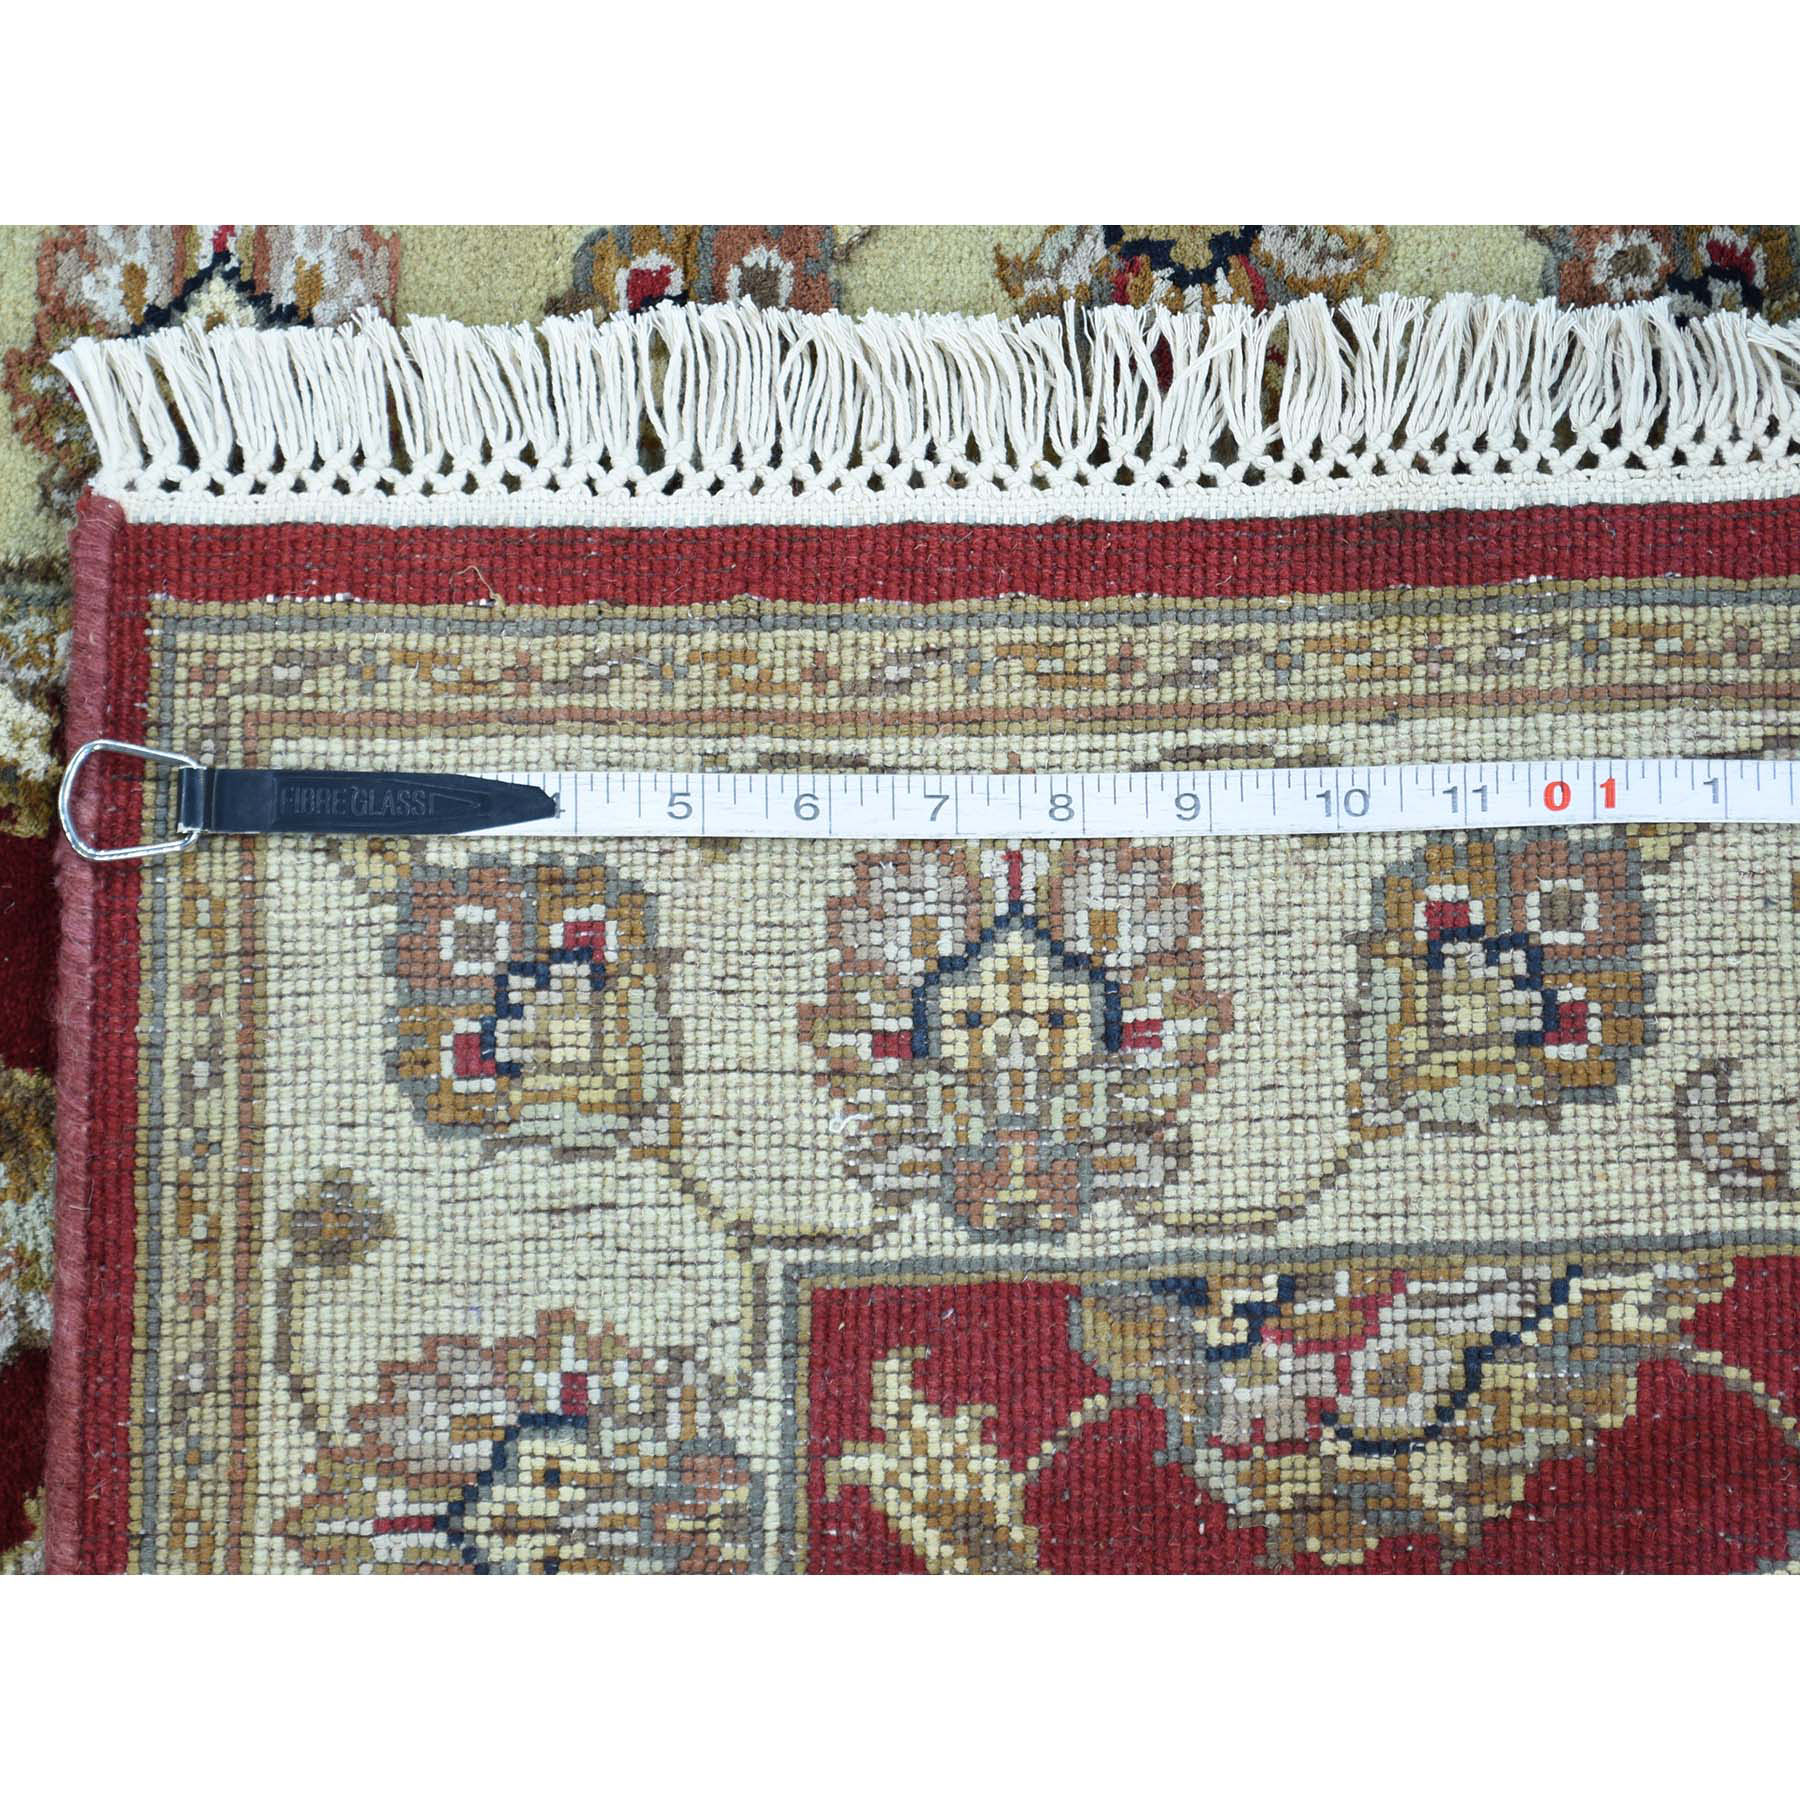 2-6 x14-10  Half Wool And Half Silk Red Rajasthan XL Runner Handmade Rug 